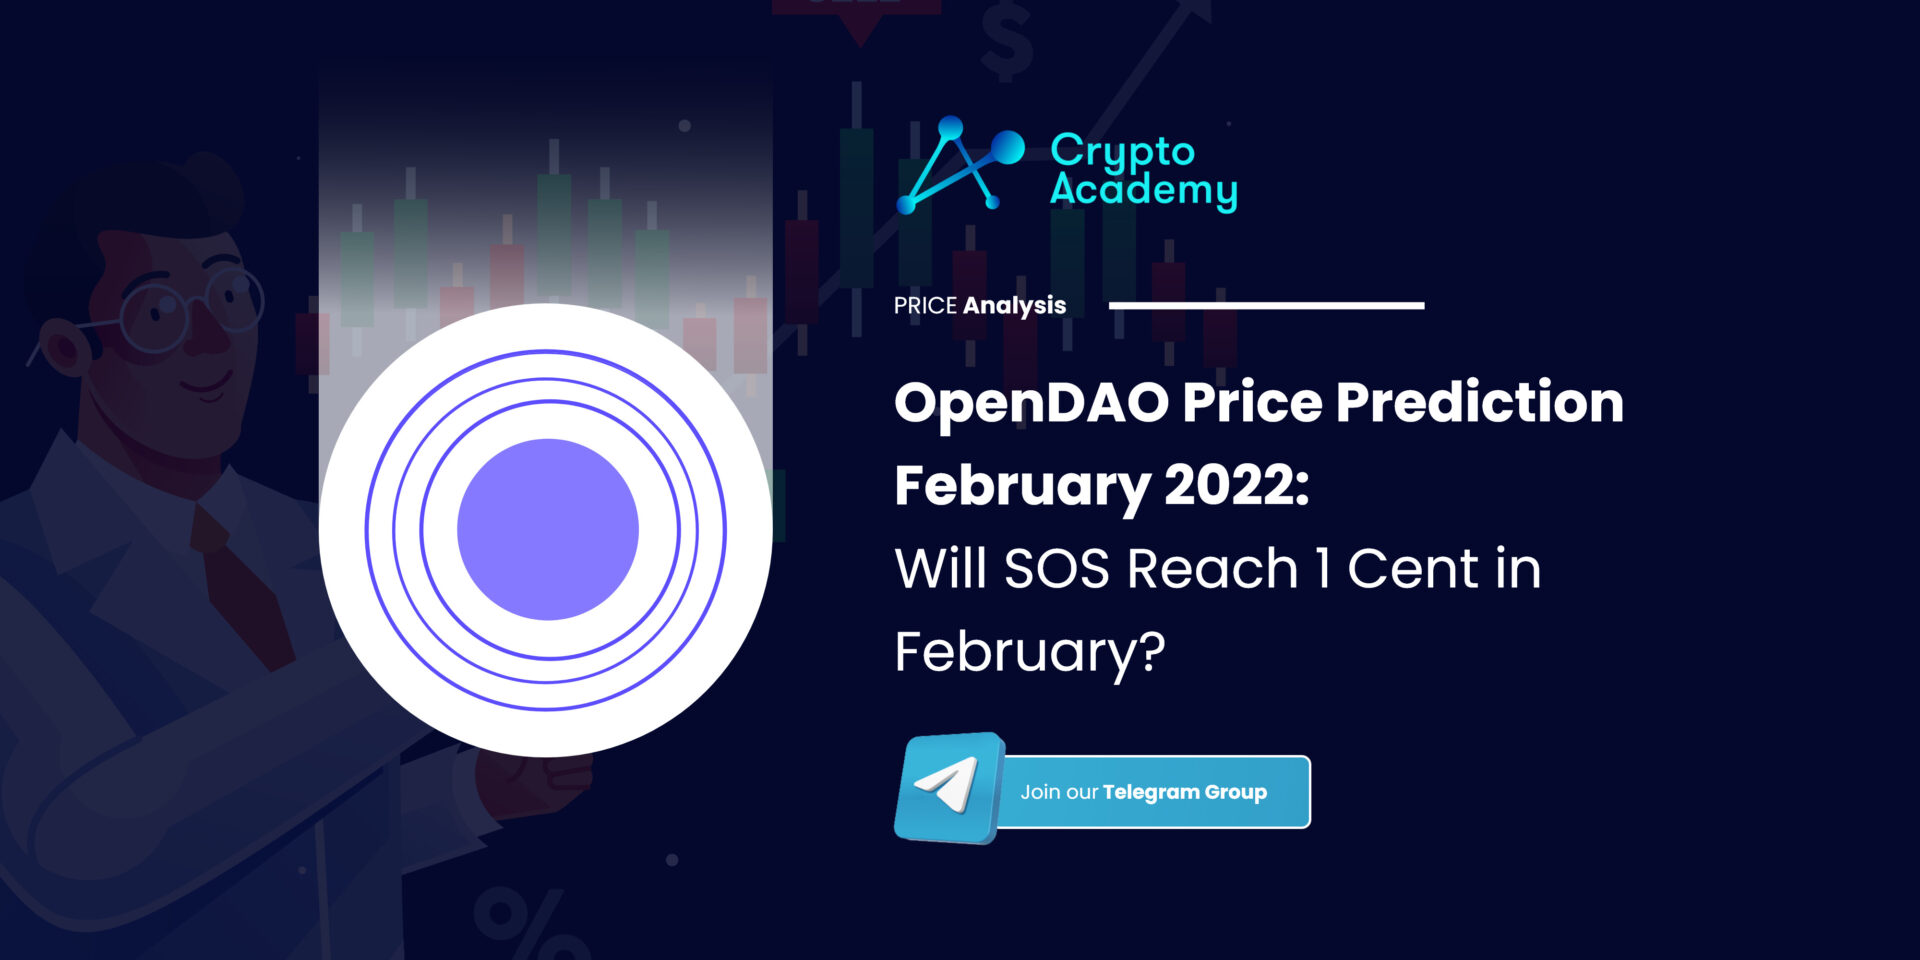 OpenDAO Price Prediction February 2022: Will SOS Reach 1 Cent in February?